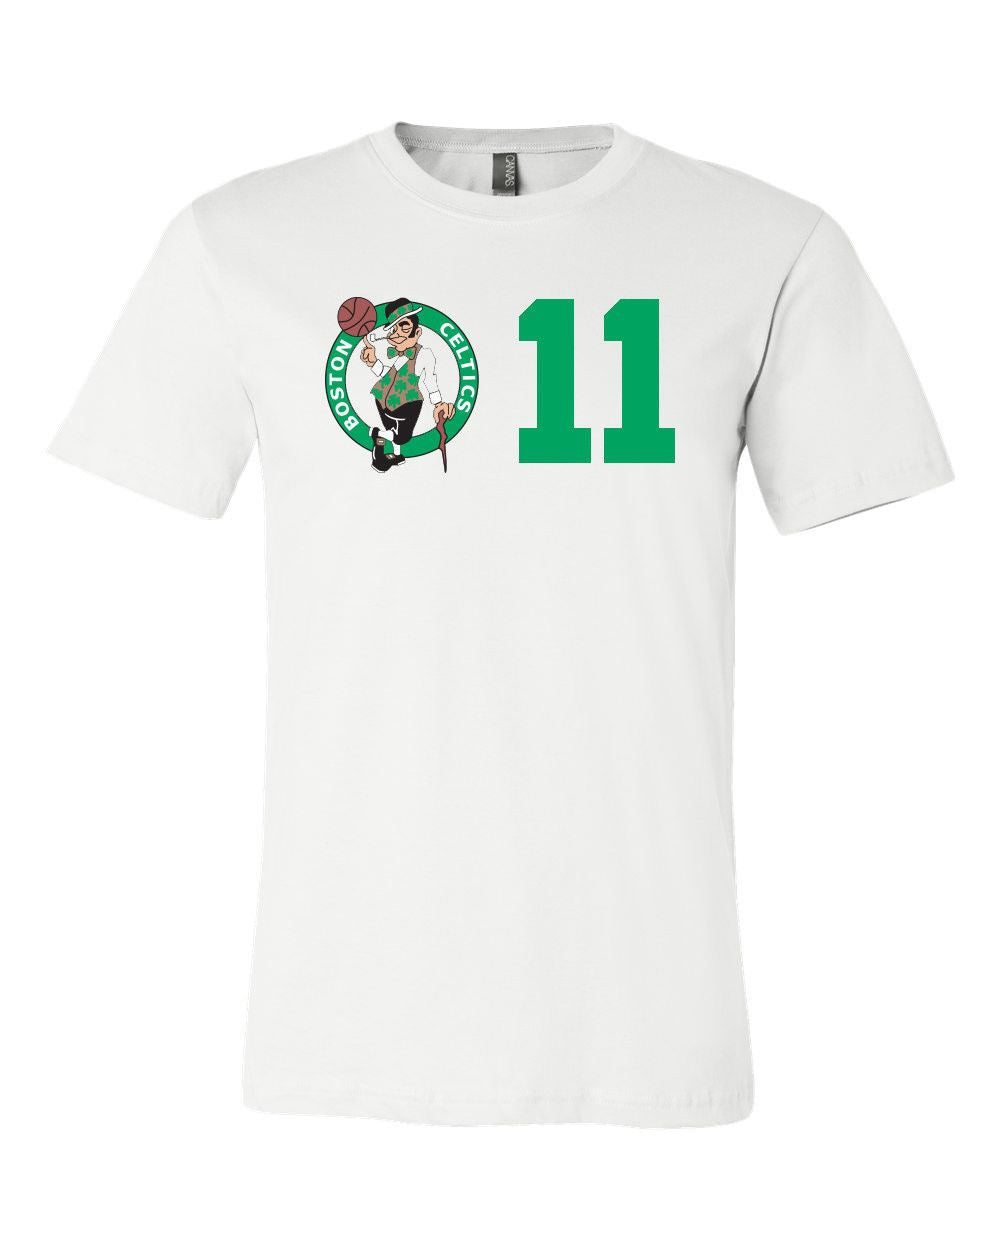 Kyrie Irving Boston Celtics LOGO jersey T-shirt Shirt